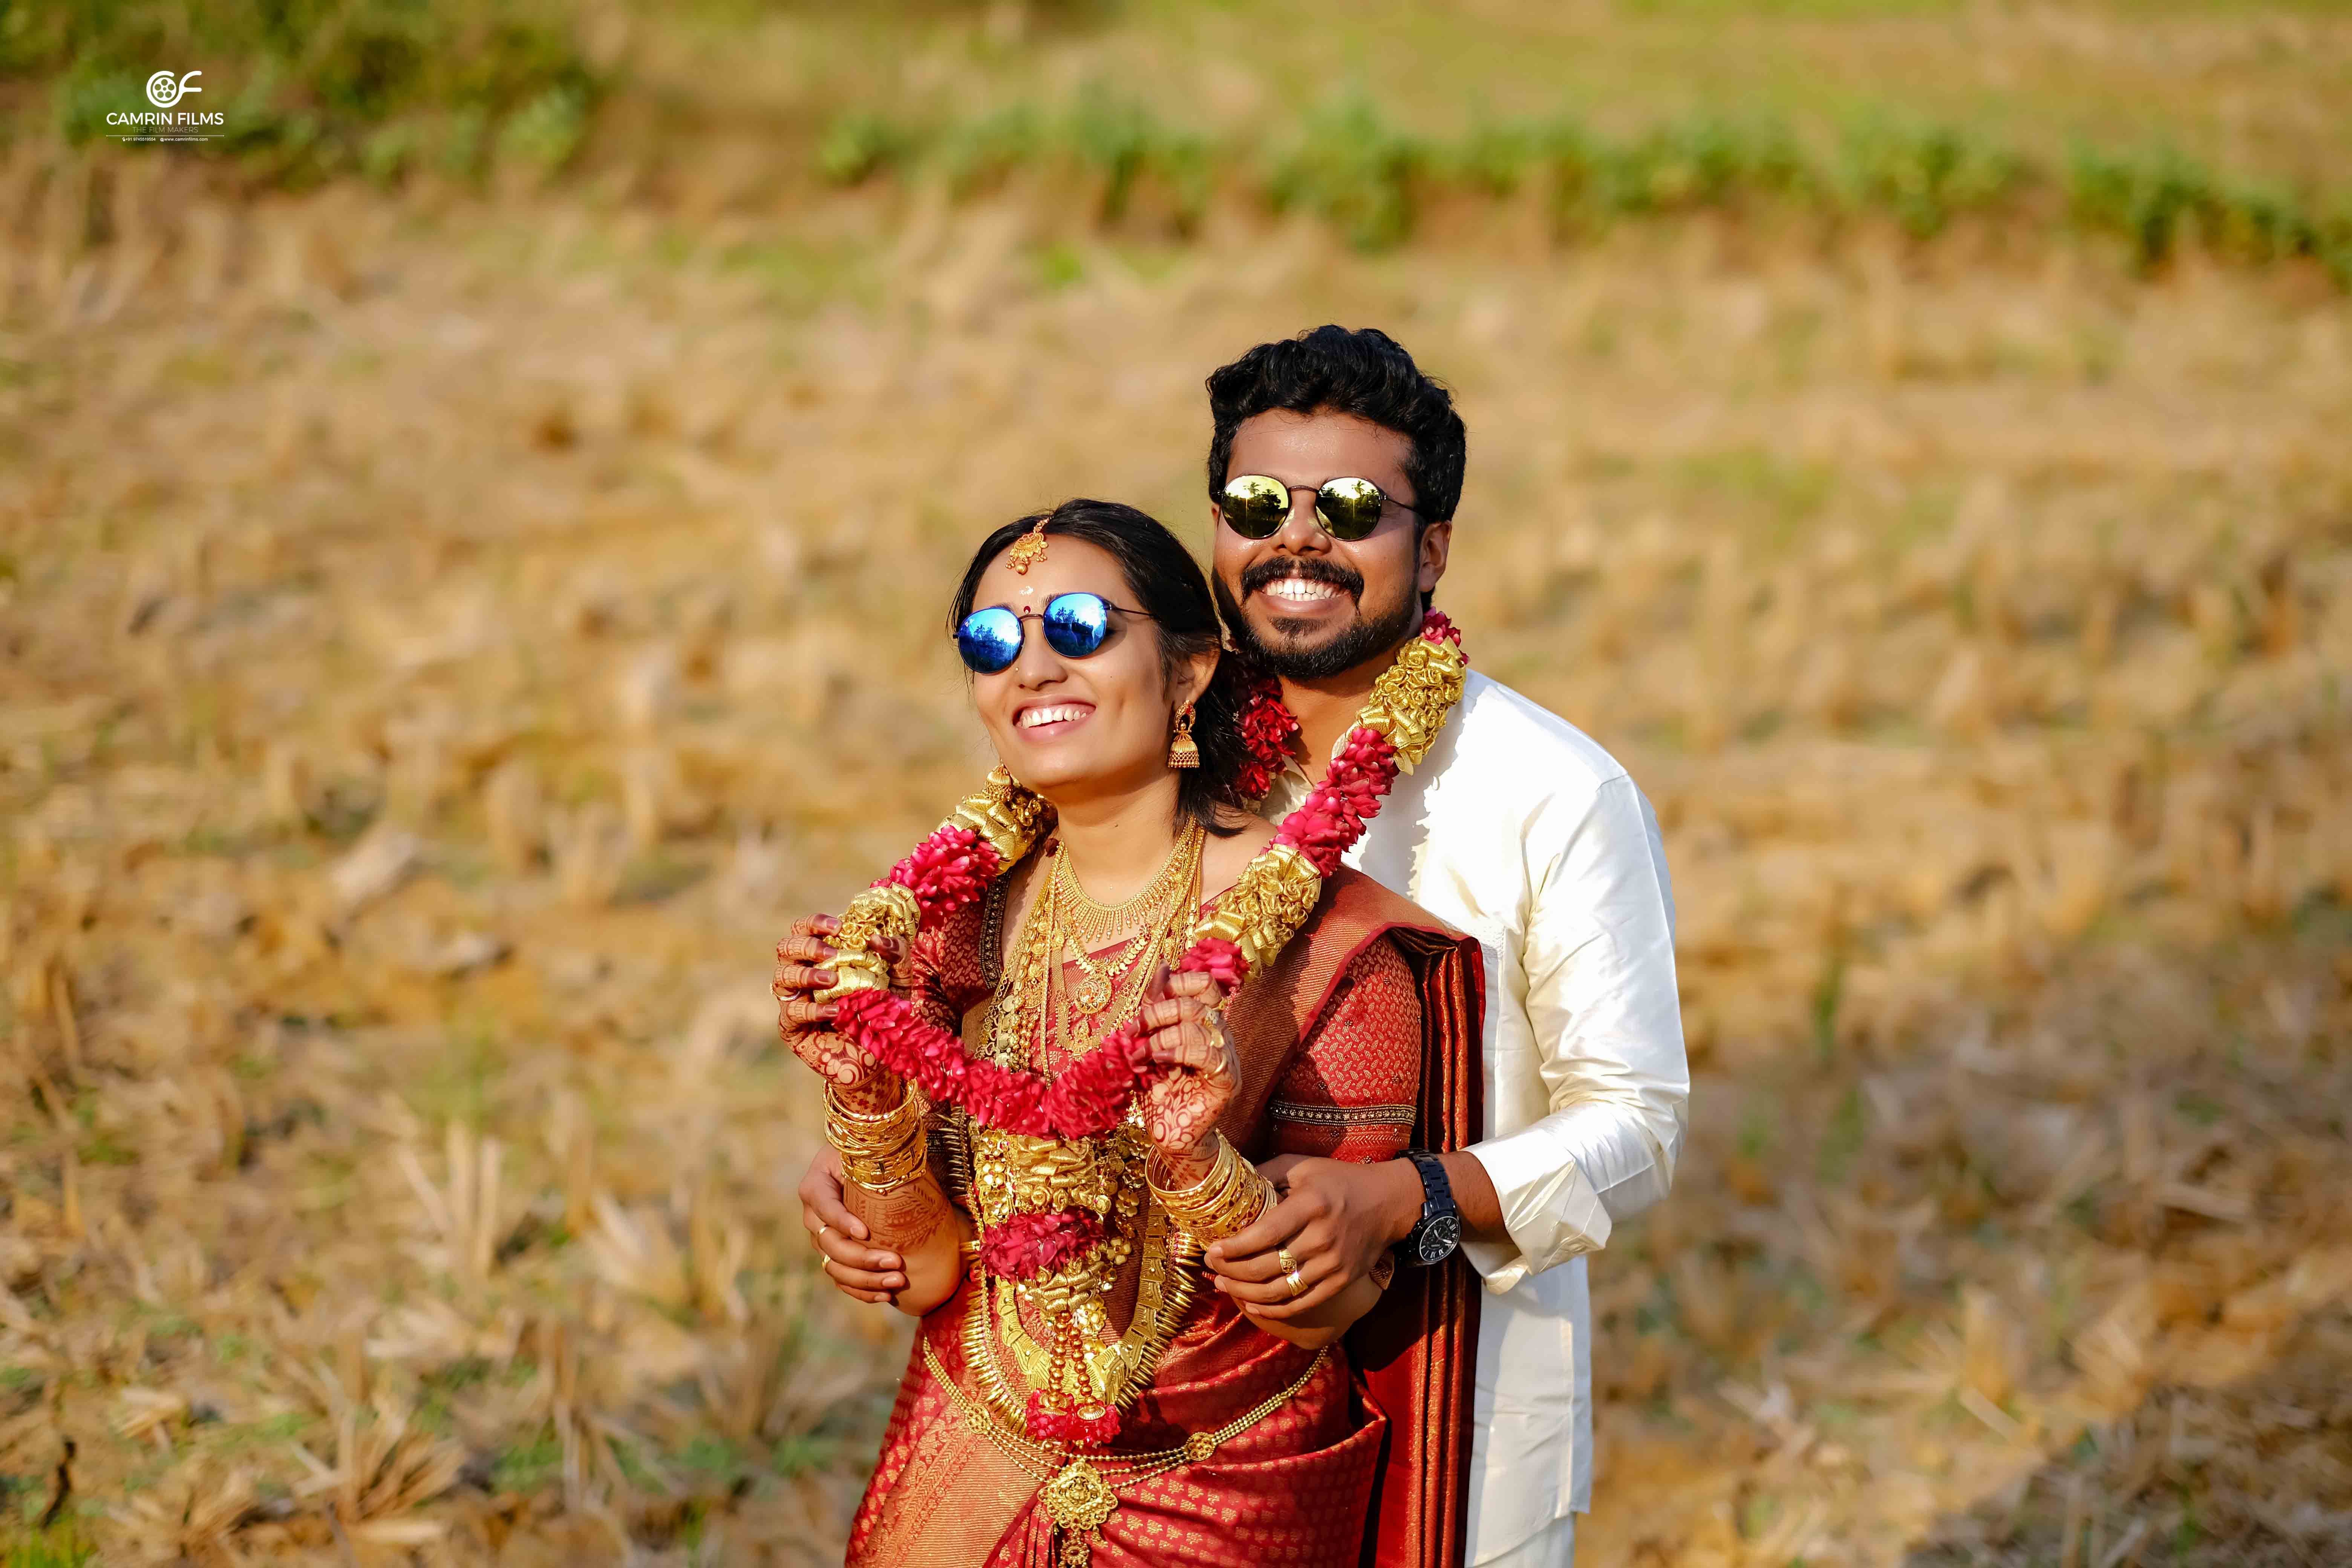 Awesome kerala wedding photography poses ideas for bride & groom | kerala  weddin… | Wedding couple poses, Wedding photoshoot poses, Wedding couple  poses photography